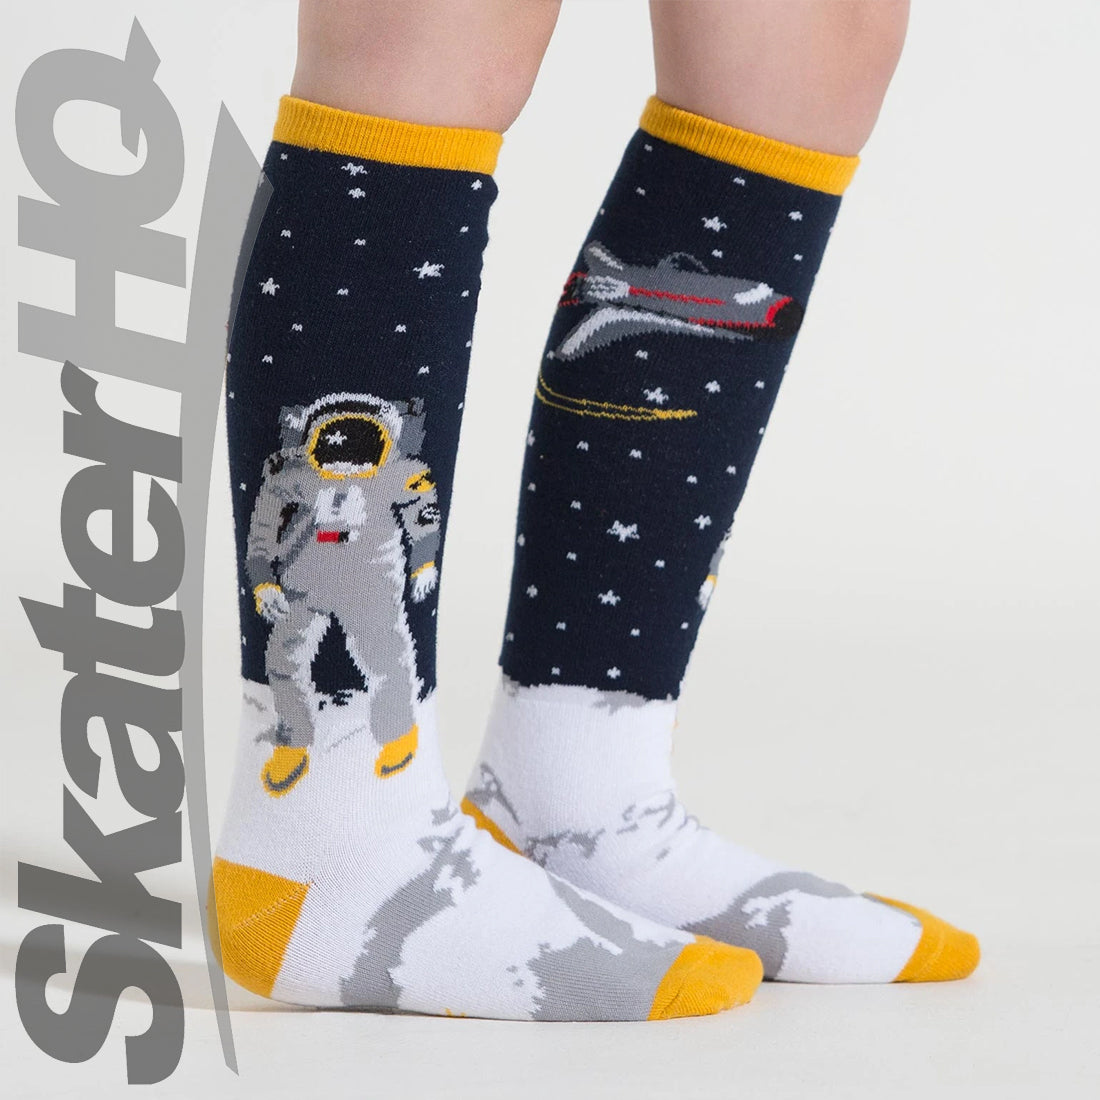 Sock It To Me - One Small Step - Junior Knee High Socks Apparel Socks